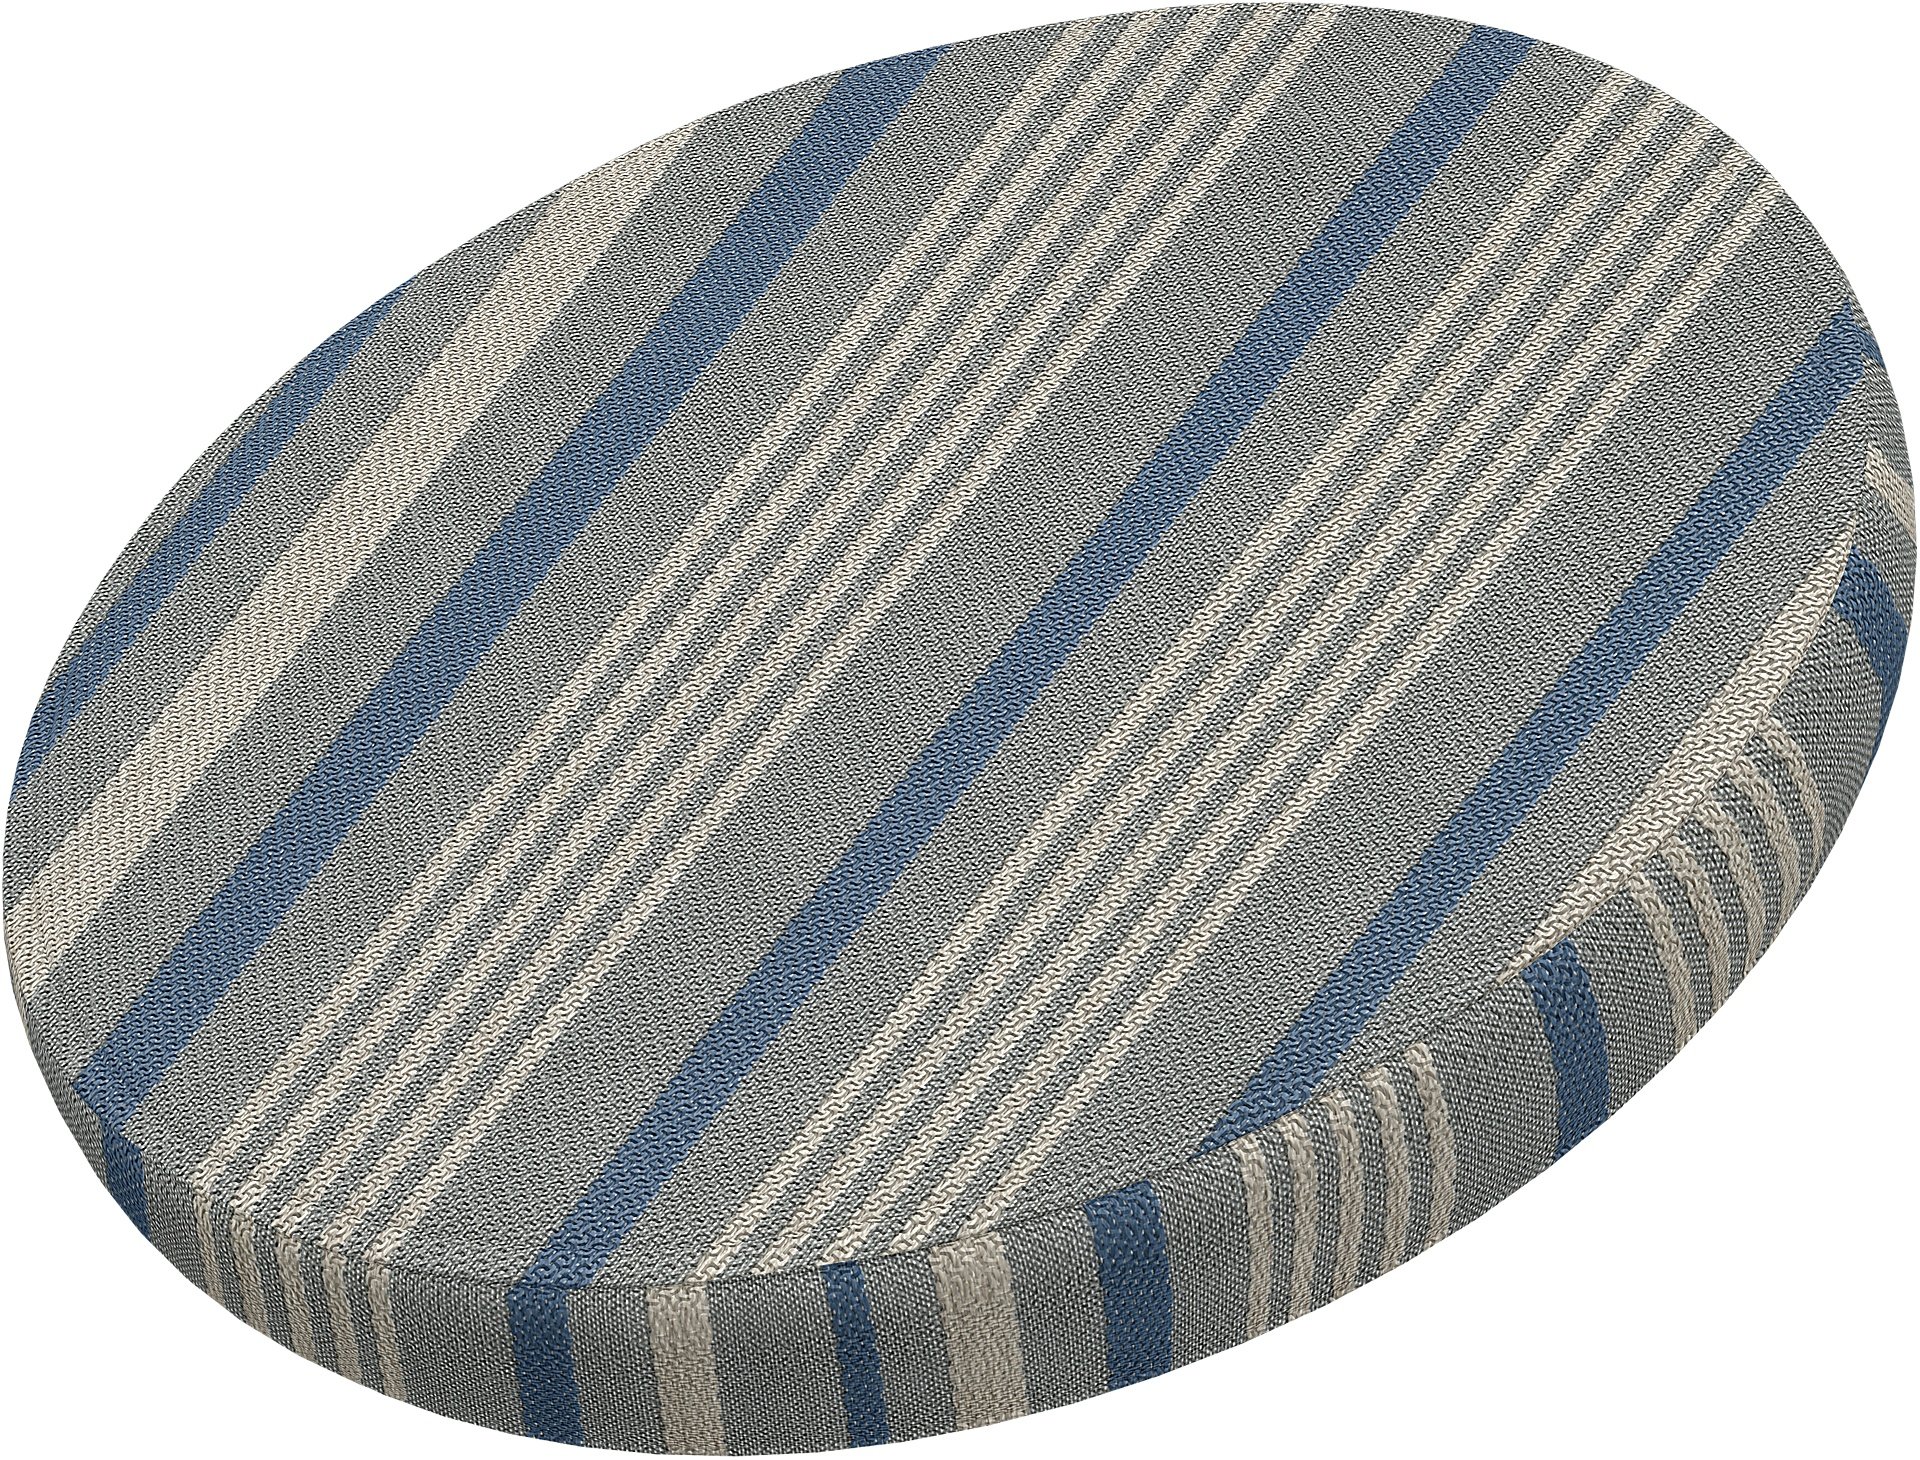 IKEA - Froson/Duvholmen Chair Seat Cushion Round Cover , Ocean Blue, Outdoor - Bemz